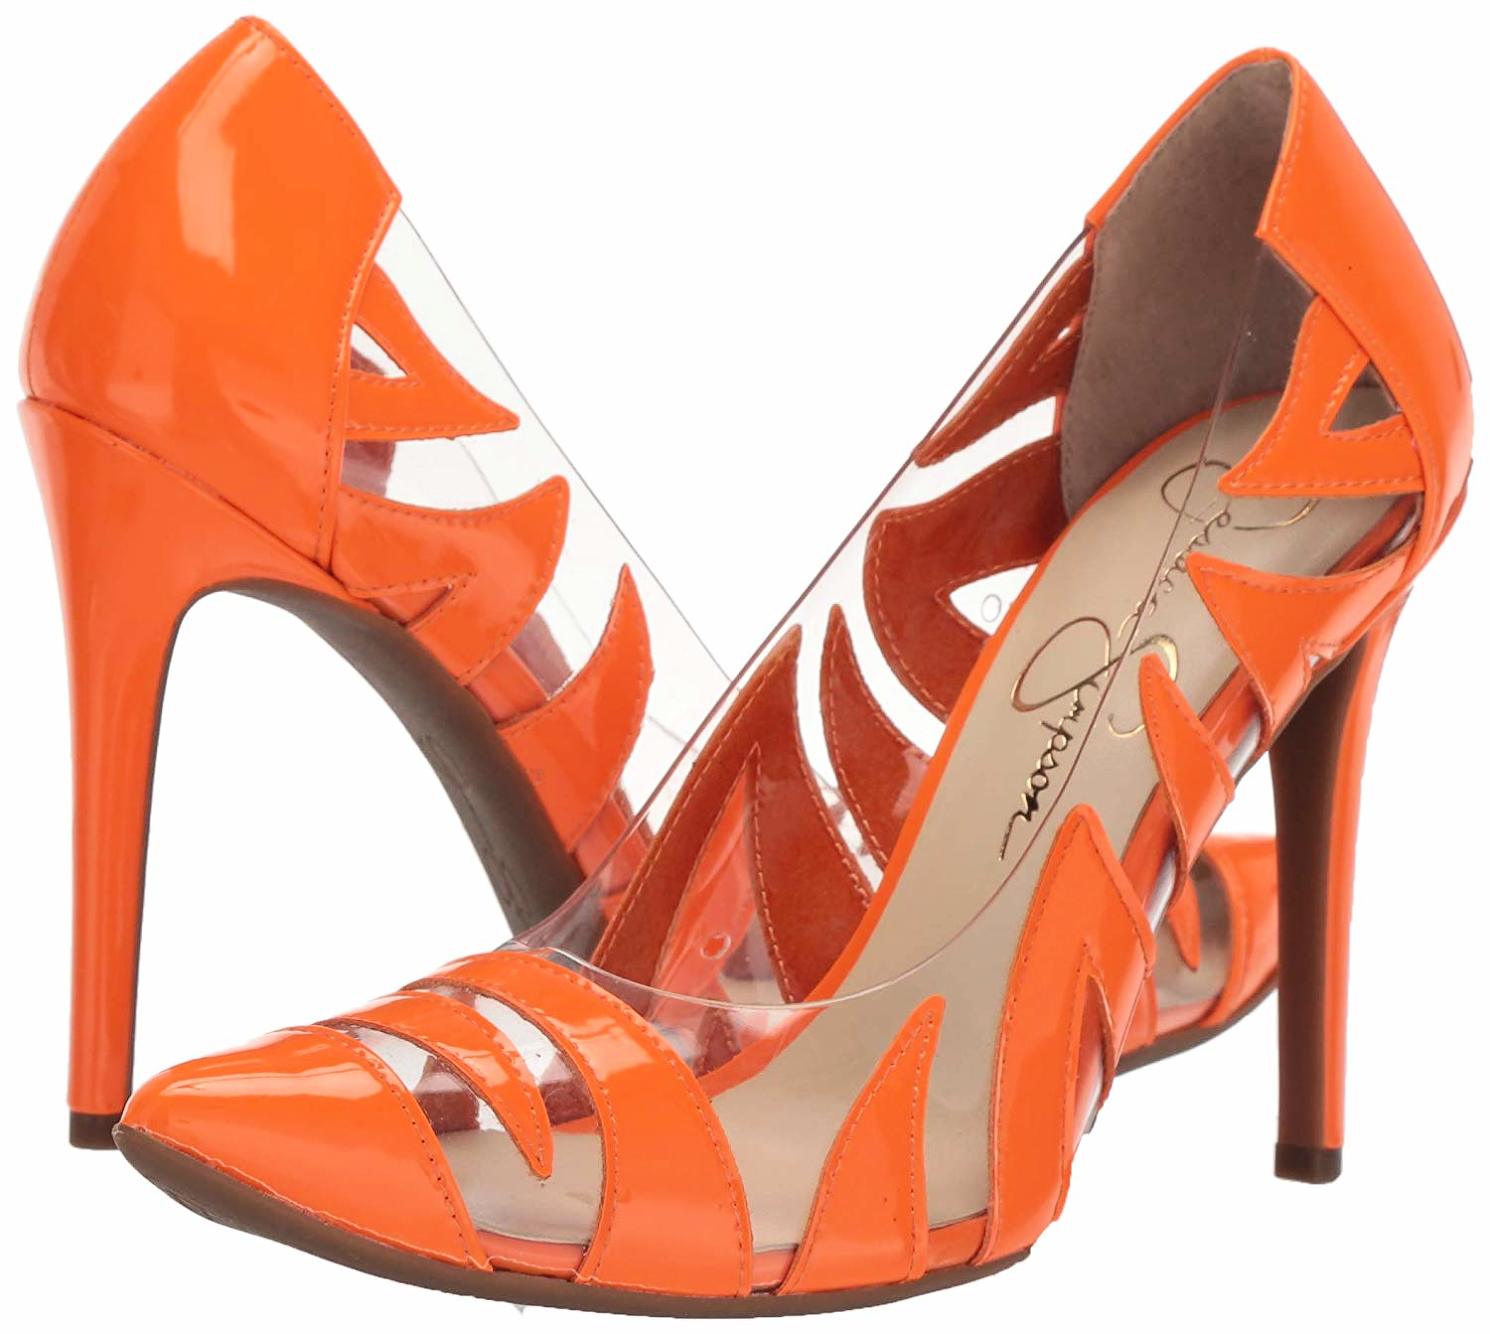 Jessica Simpson PALMRA Pump Neon Orange Clear Pointed Toe Stiletto Pumps - image 5 of 5